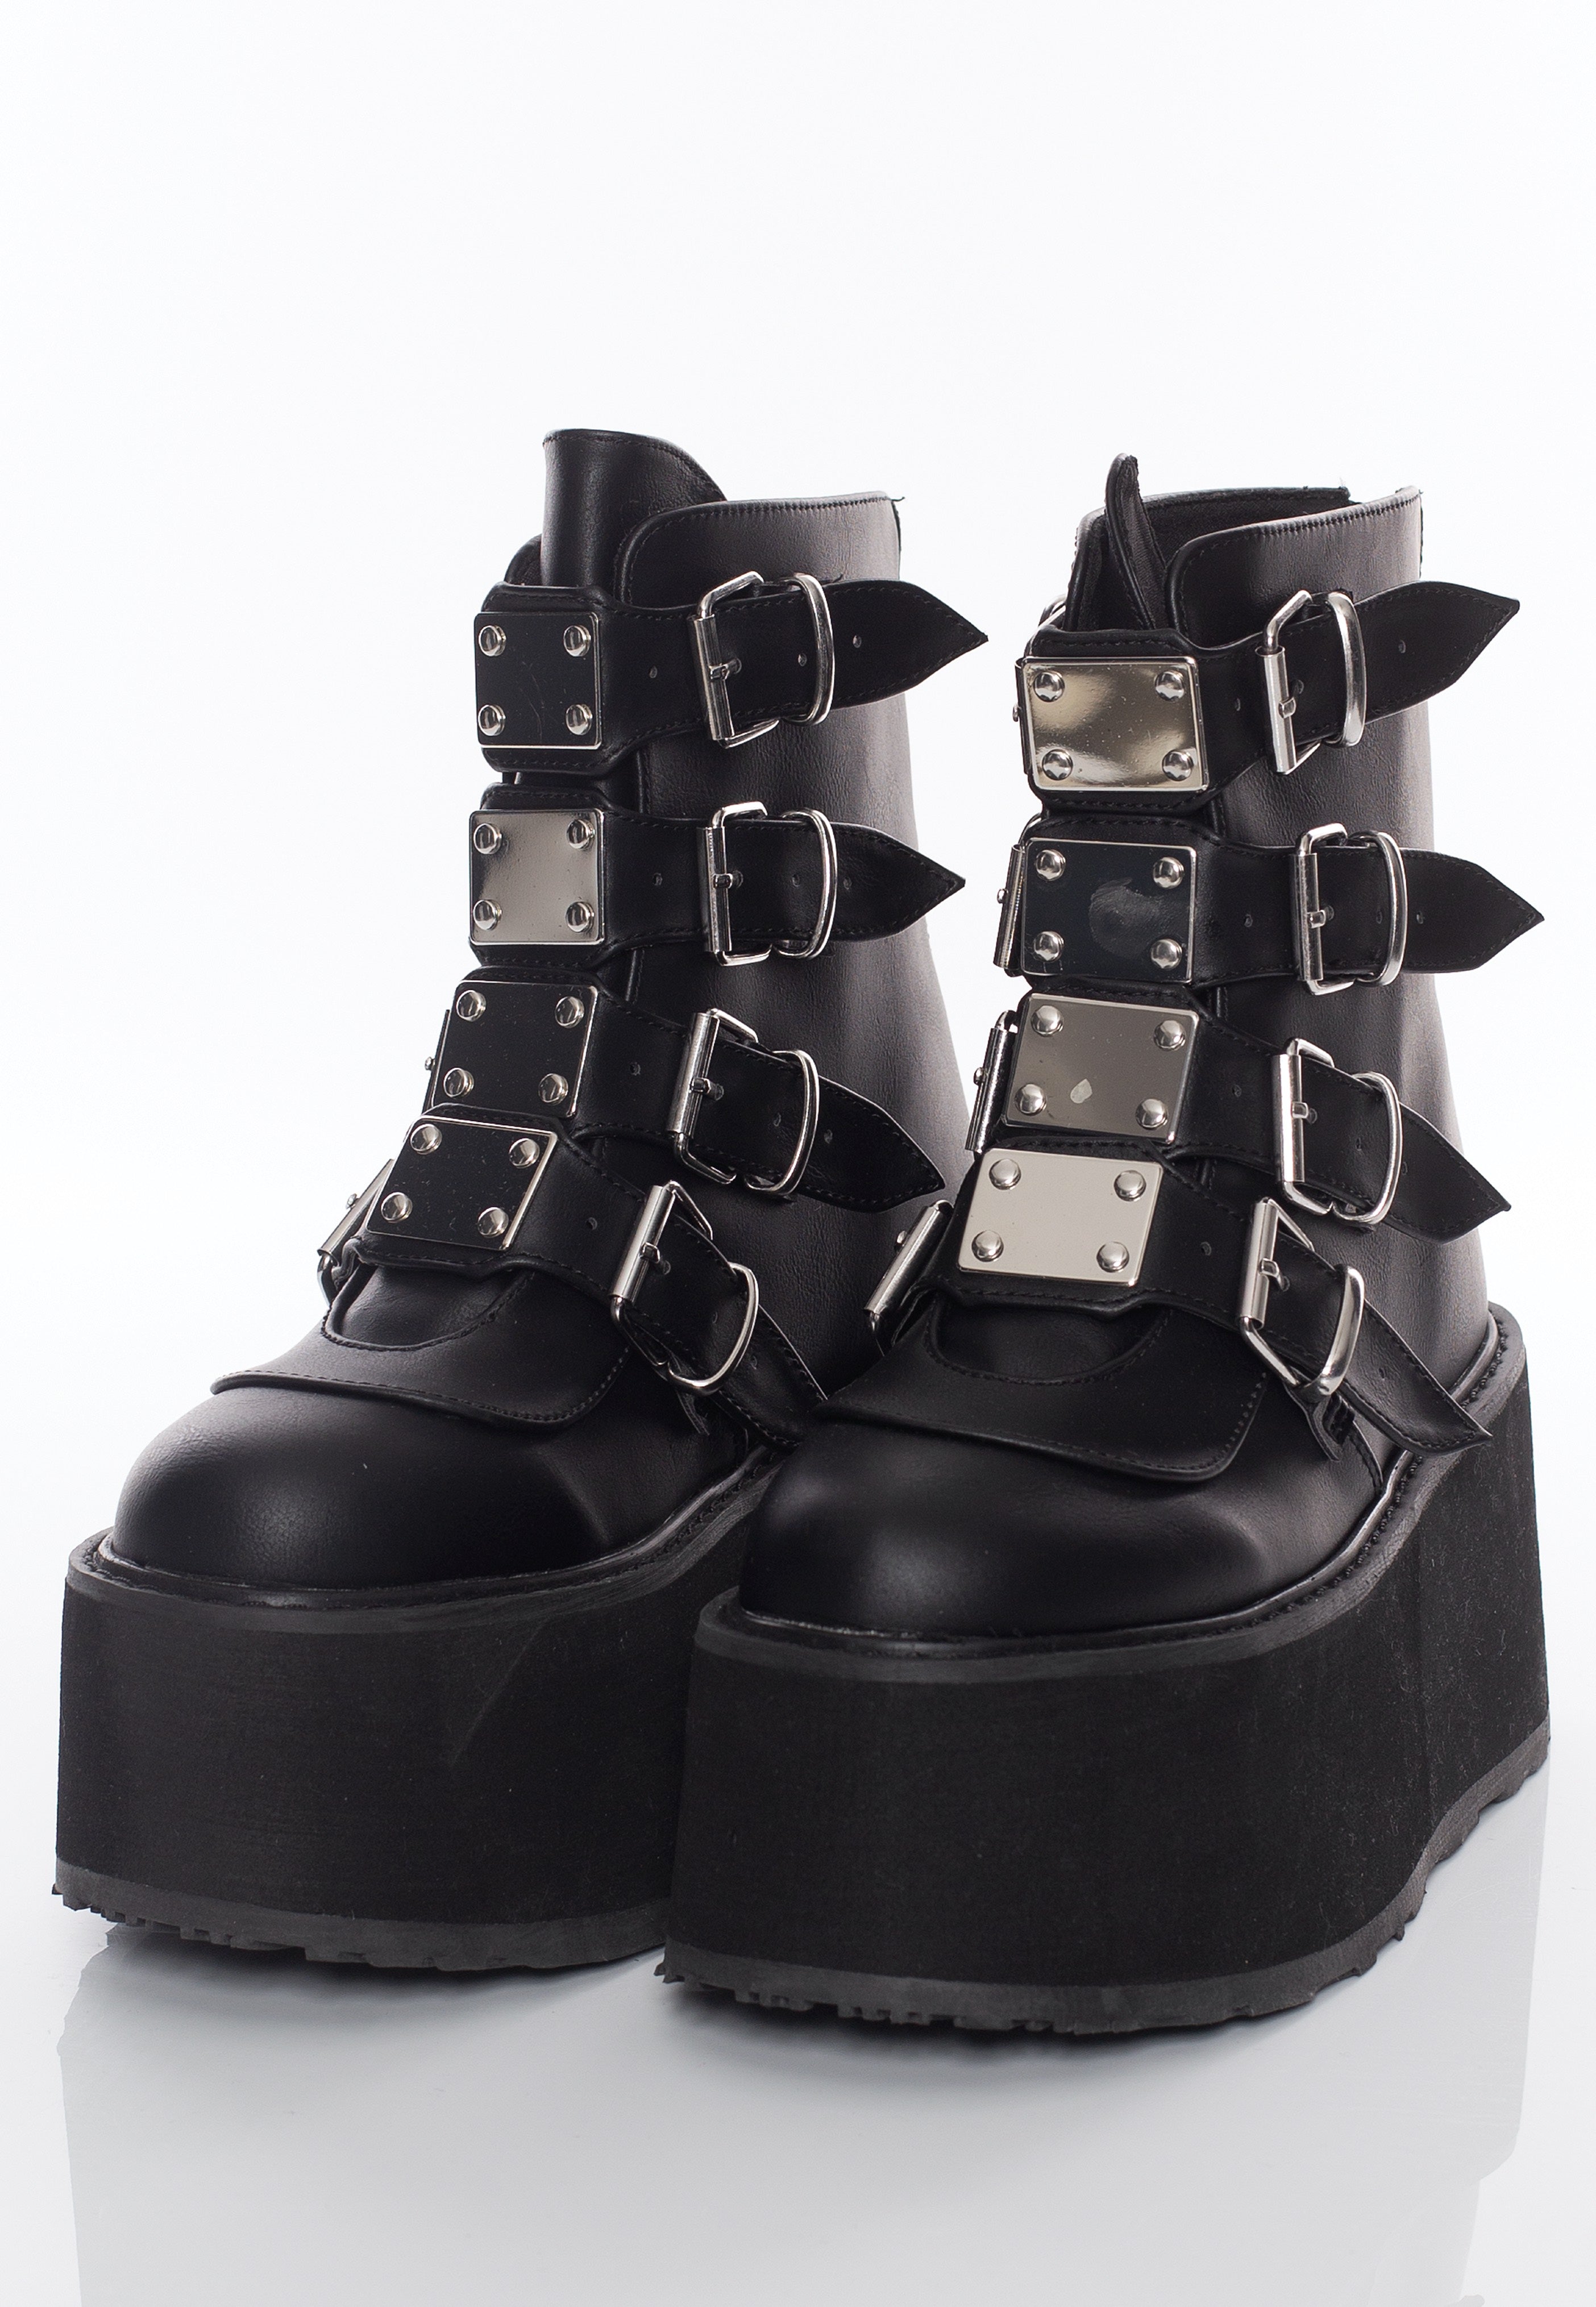 DemoniaCult - Damned 105 Black Vegan Leather - Girl Shoes